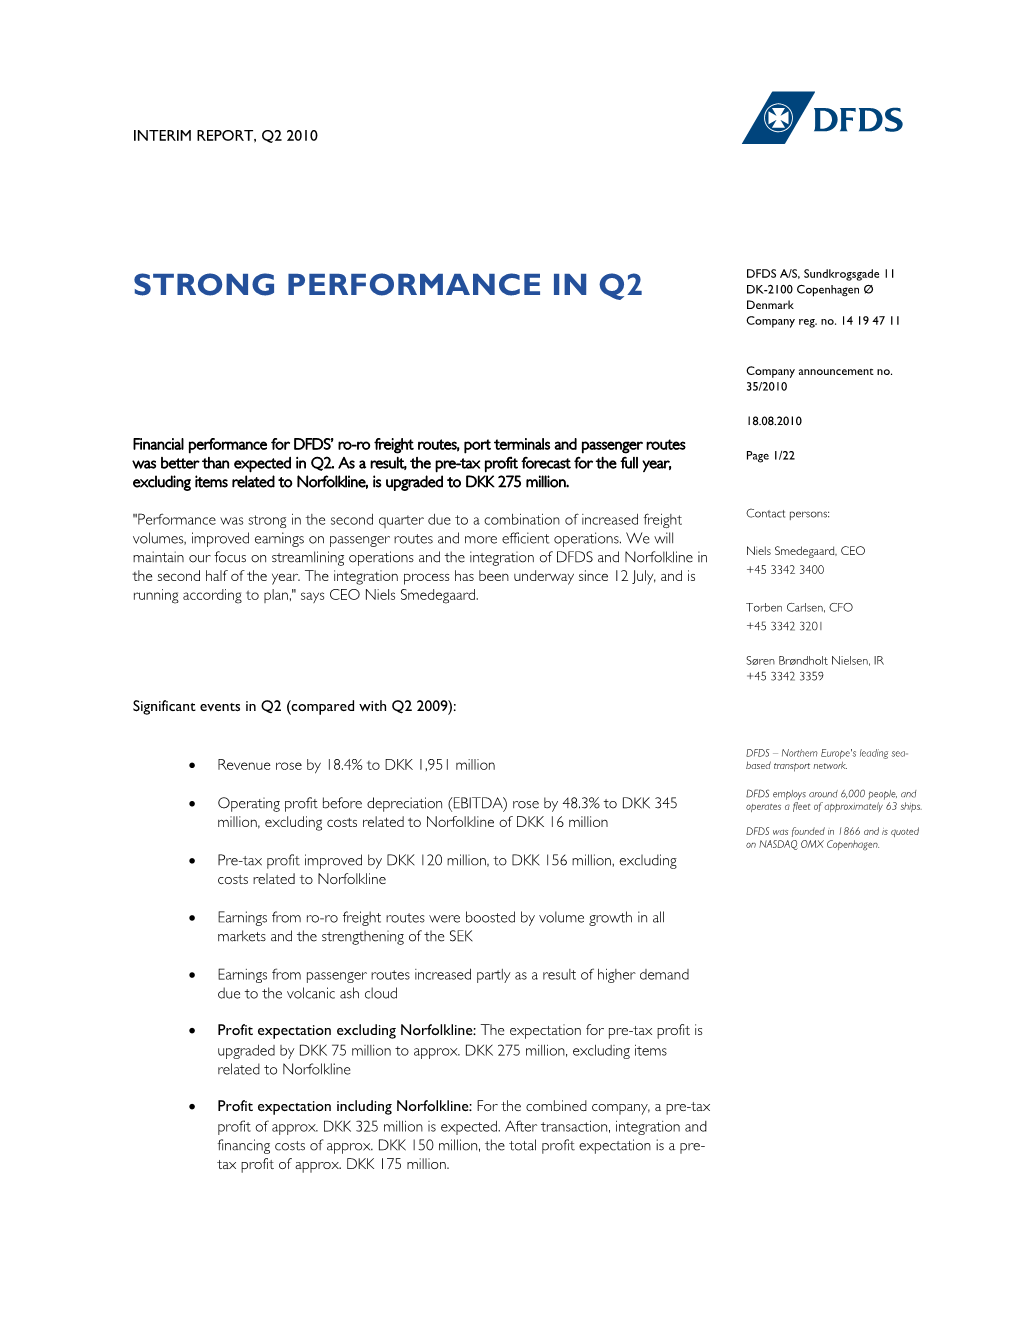 STRONG PERFORMANCE in Q2 DK-2100 Copenhagen Ø Denmark Company Reg